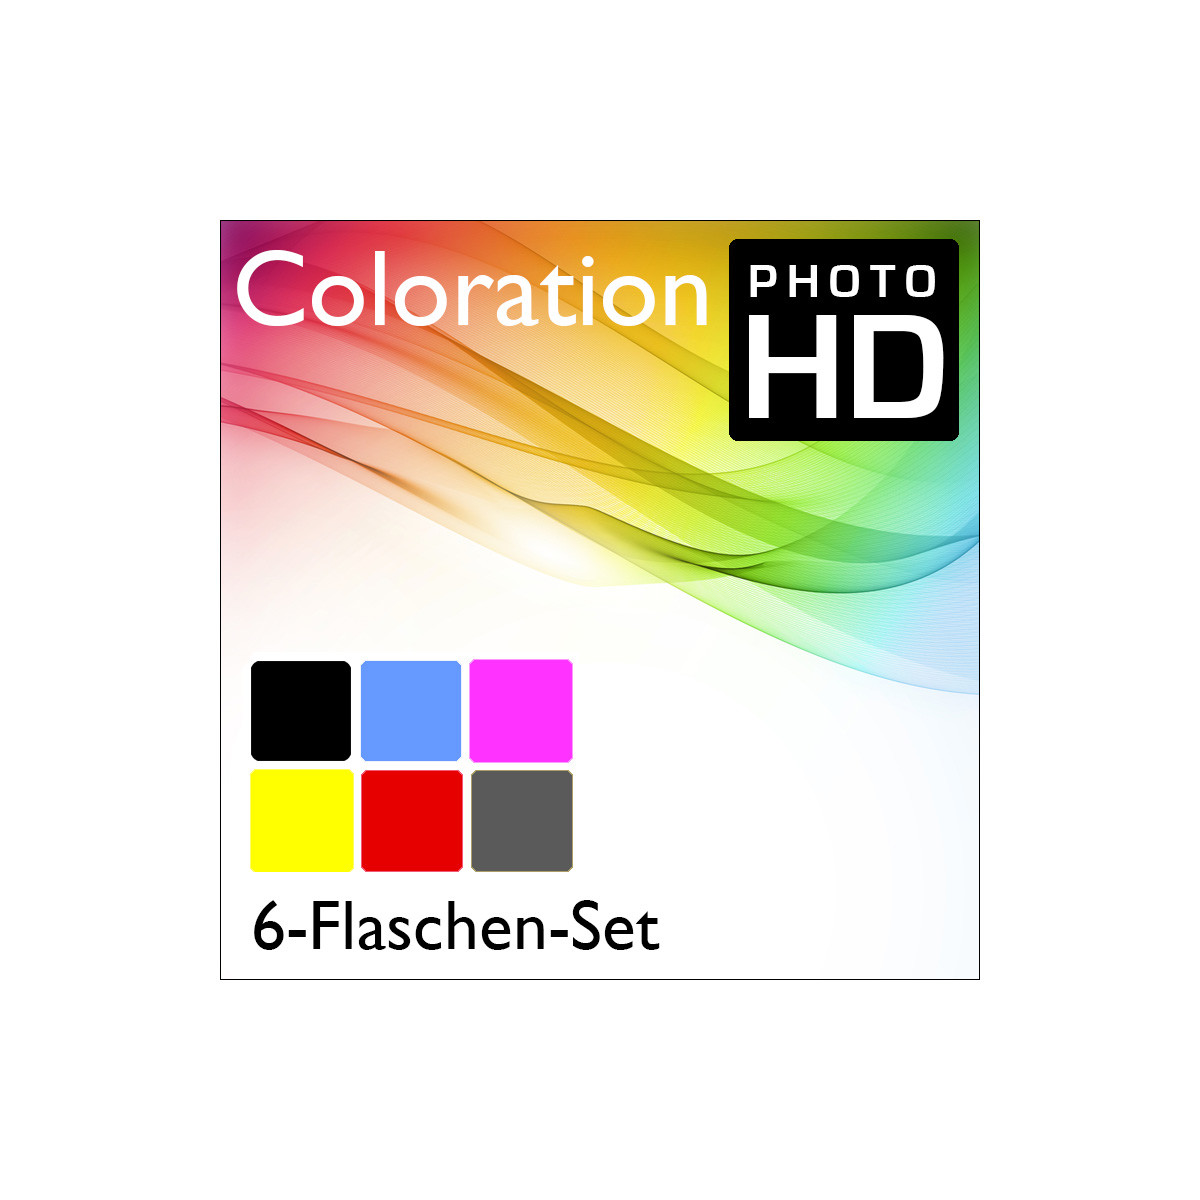 Coloration PhotoHD 6-Flaschen-Set (mit R,GY)